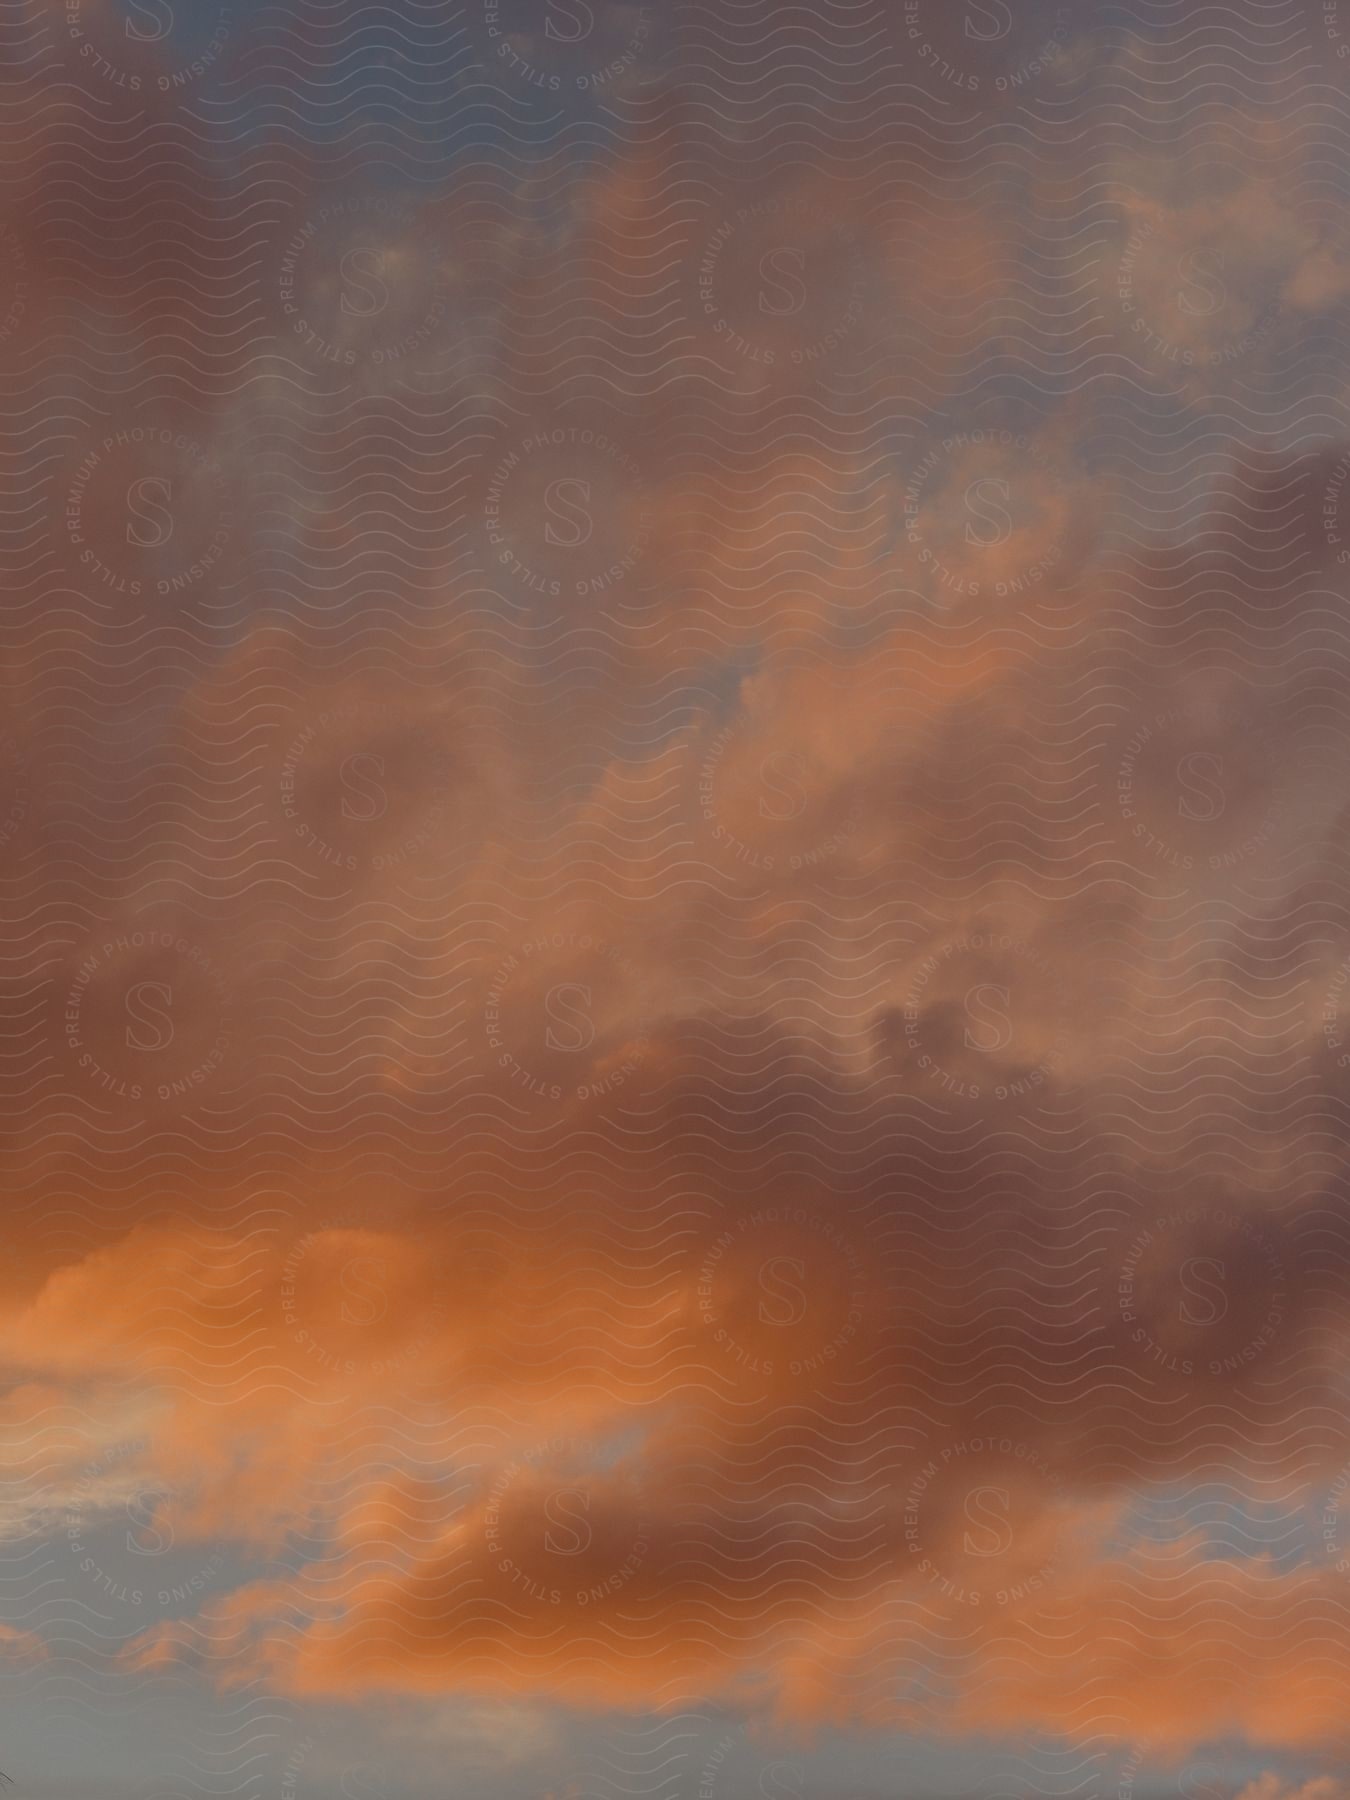 Orange clouds floating in the sky at sundown